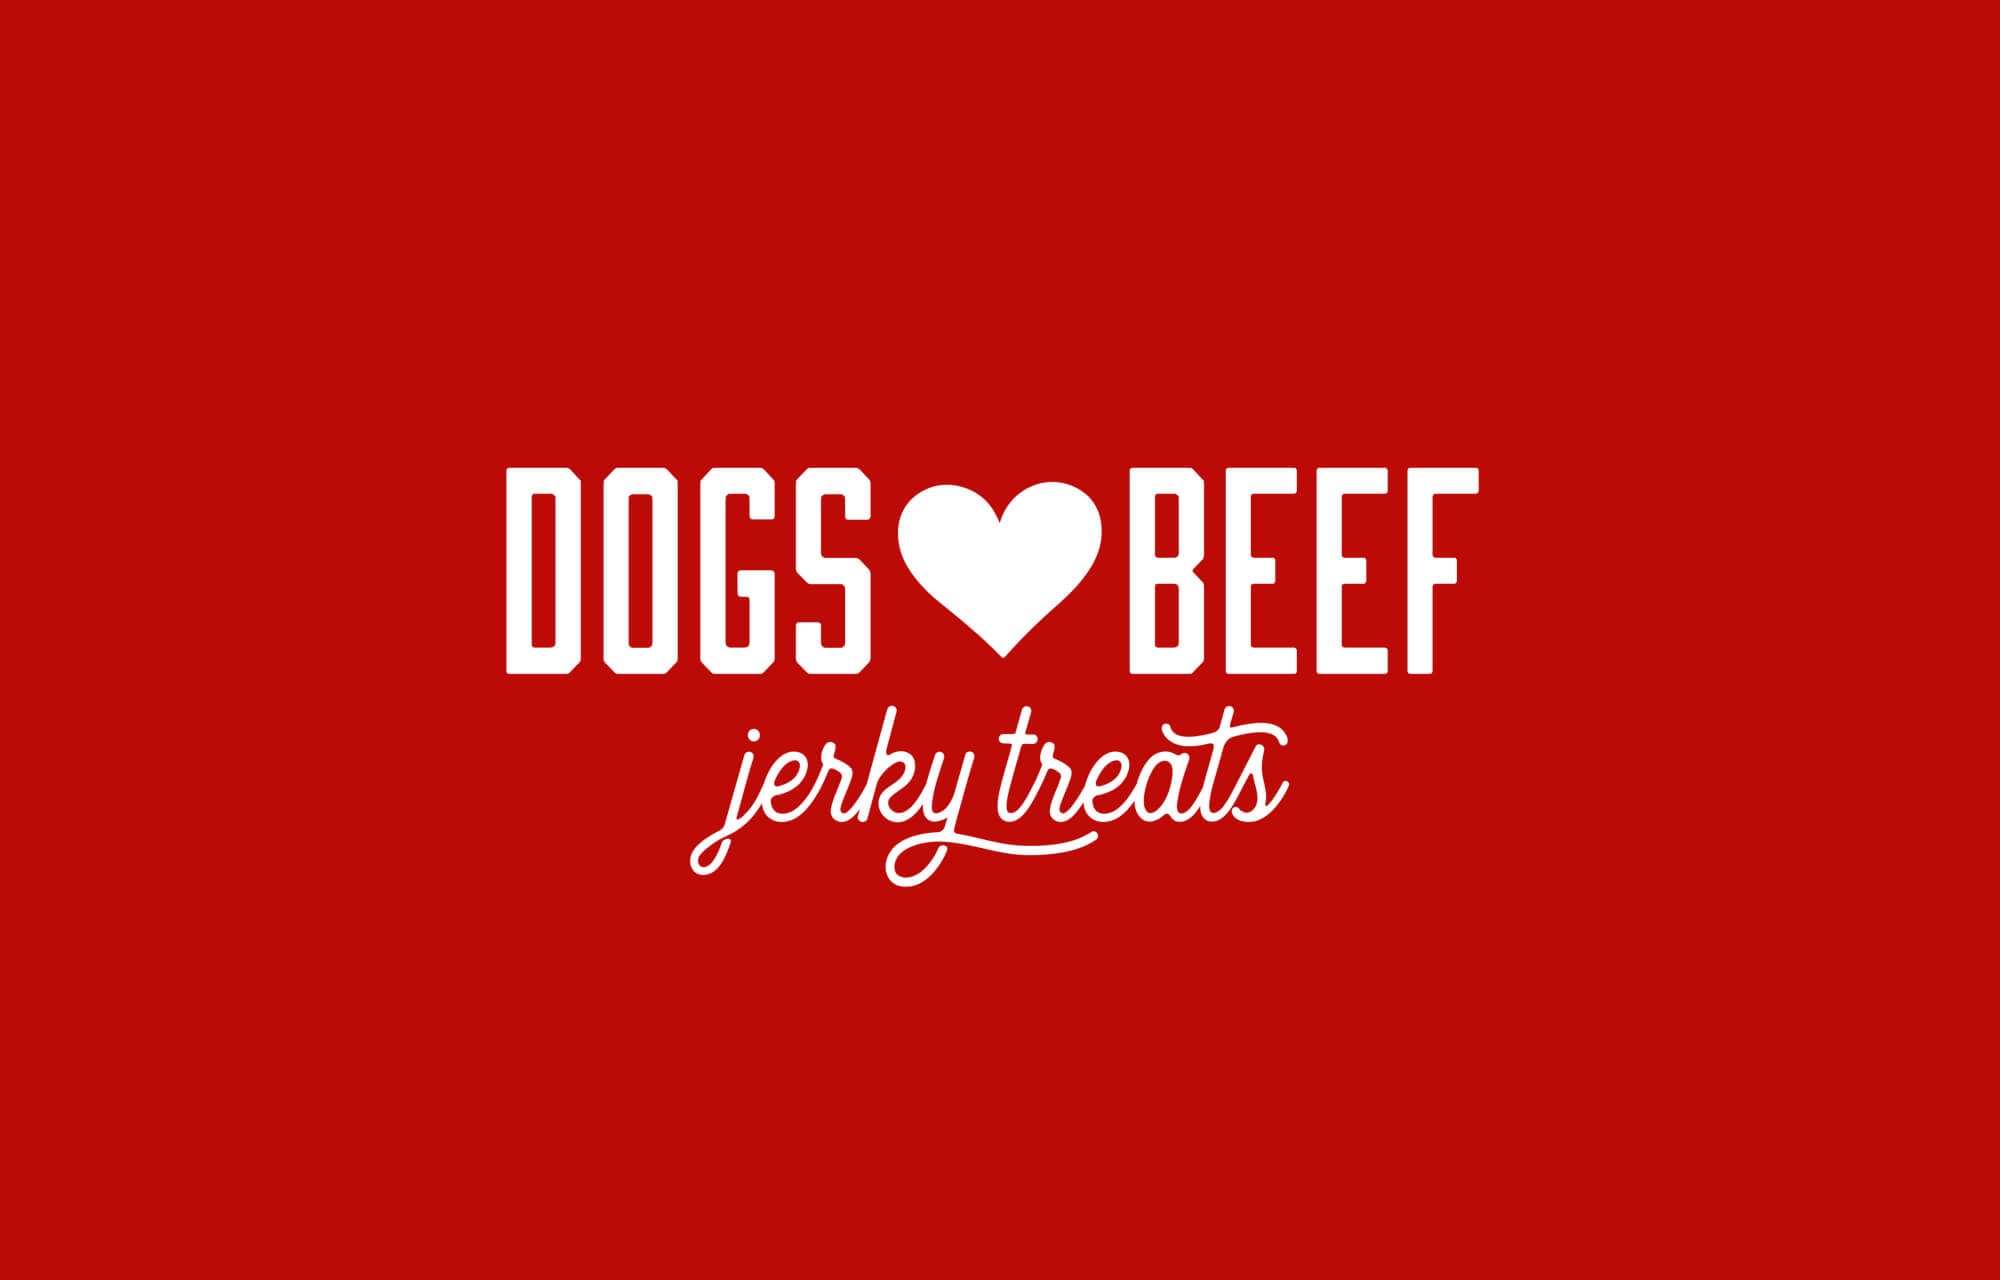 Dogs Heart Beef jerky treat logo